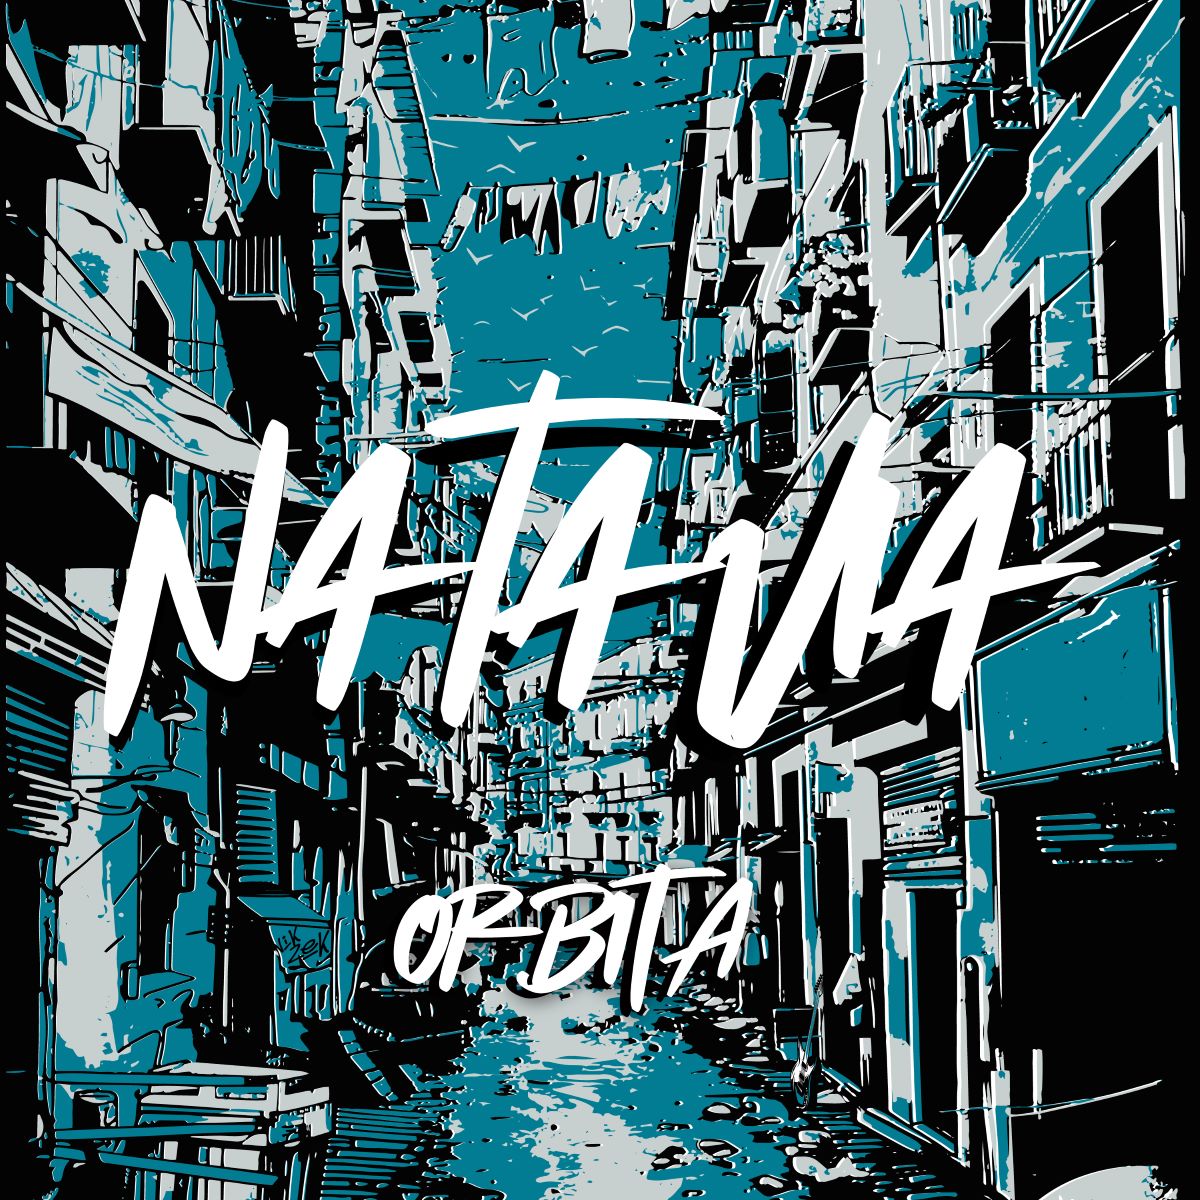 Natavia – Il singolo “Orbita” | INTERVISTA